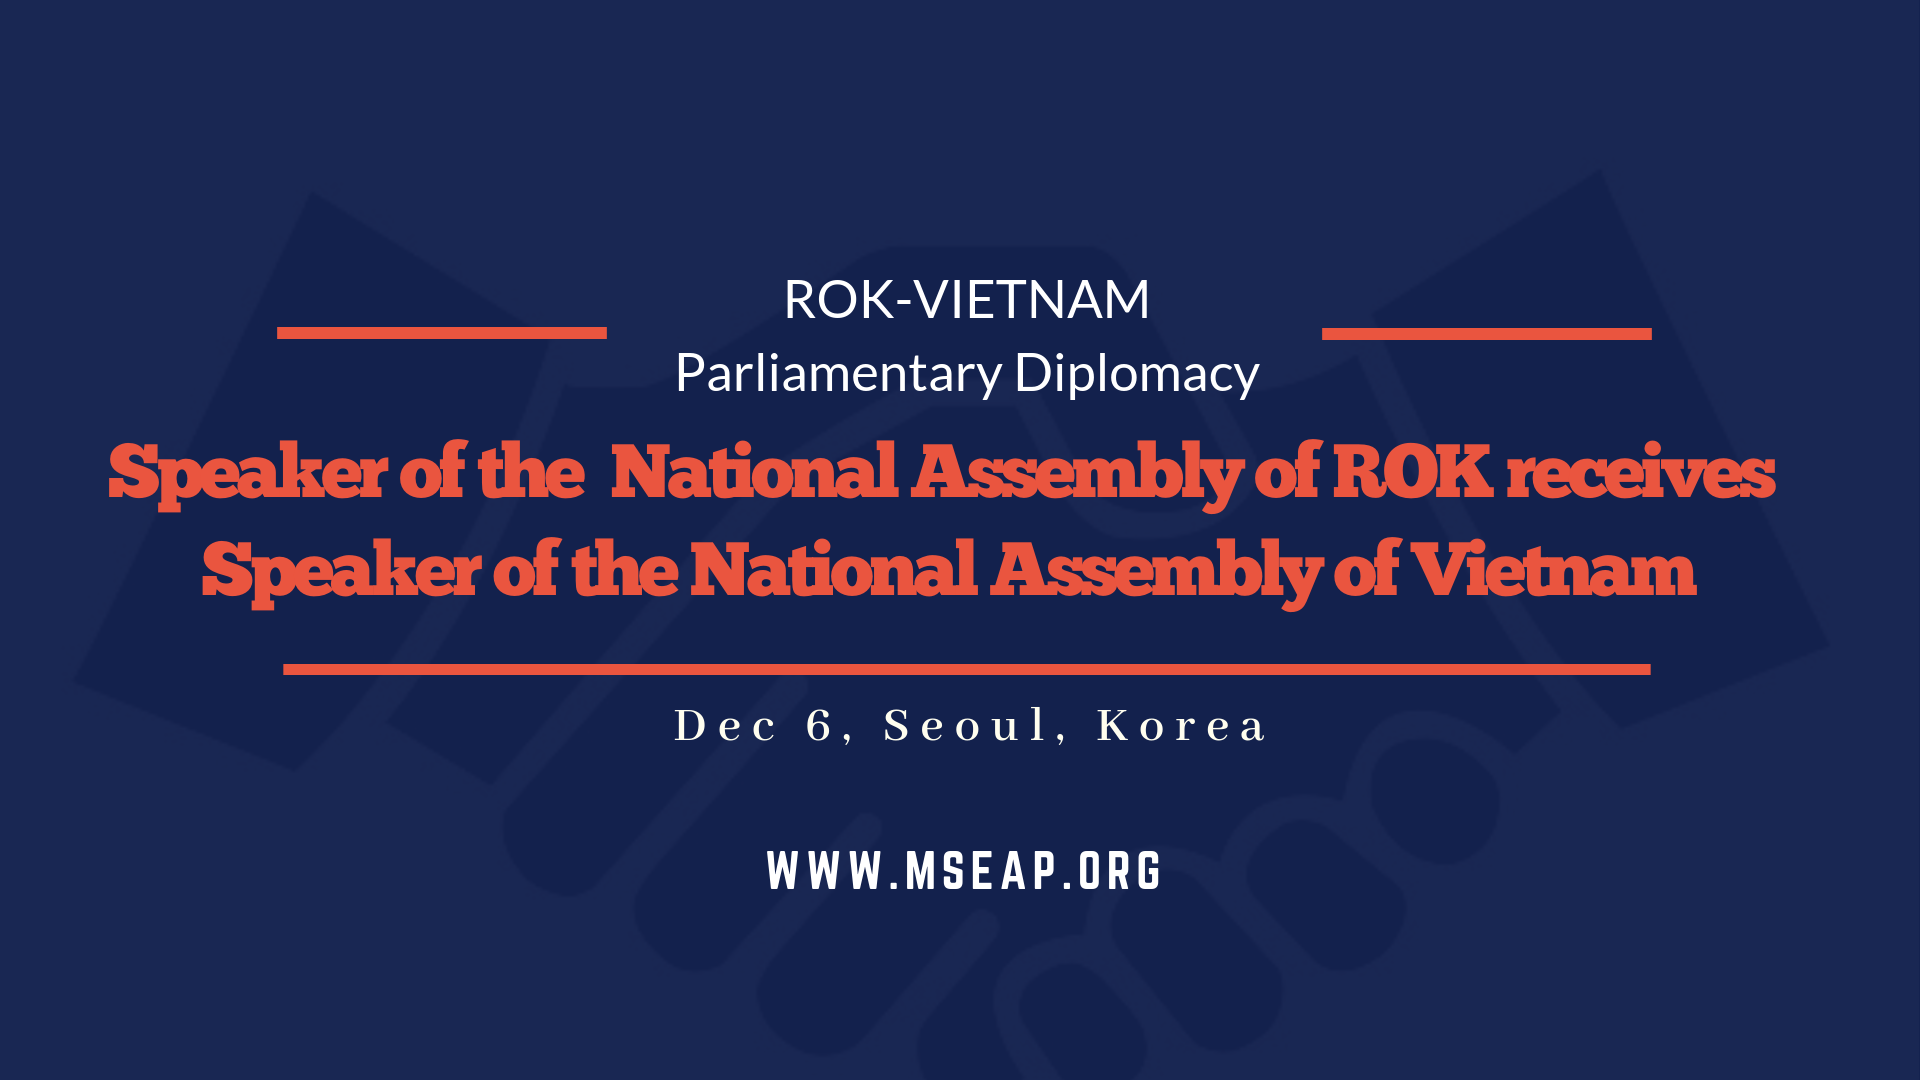 Speaker of the National Assembly of ROK receives the speaker of the National Assembly of Vietnam